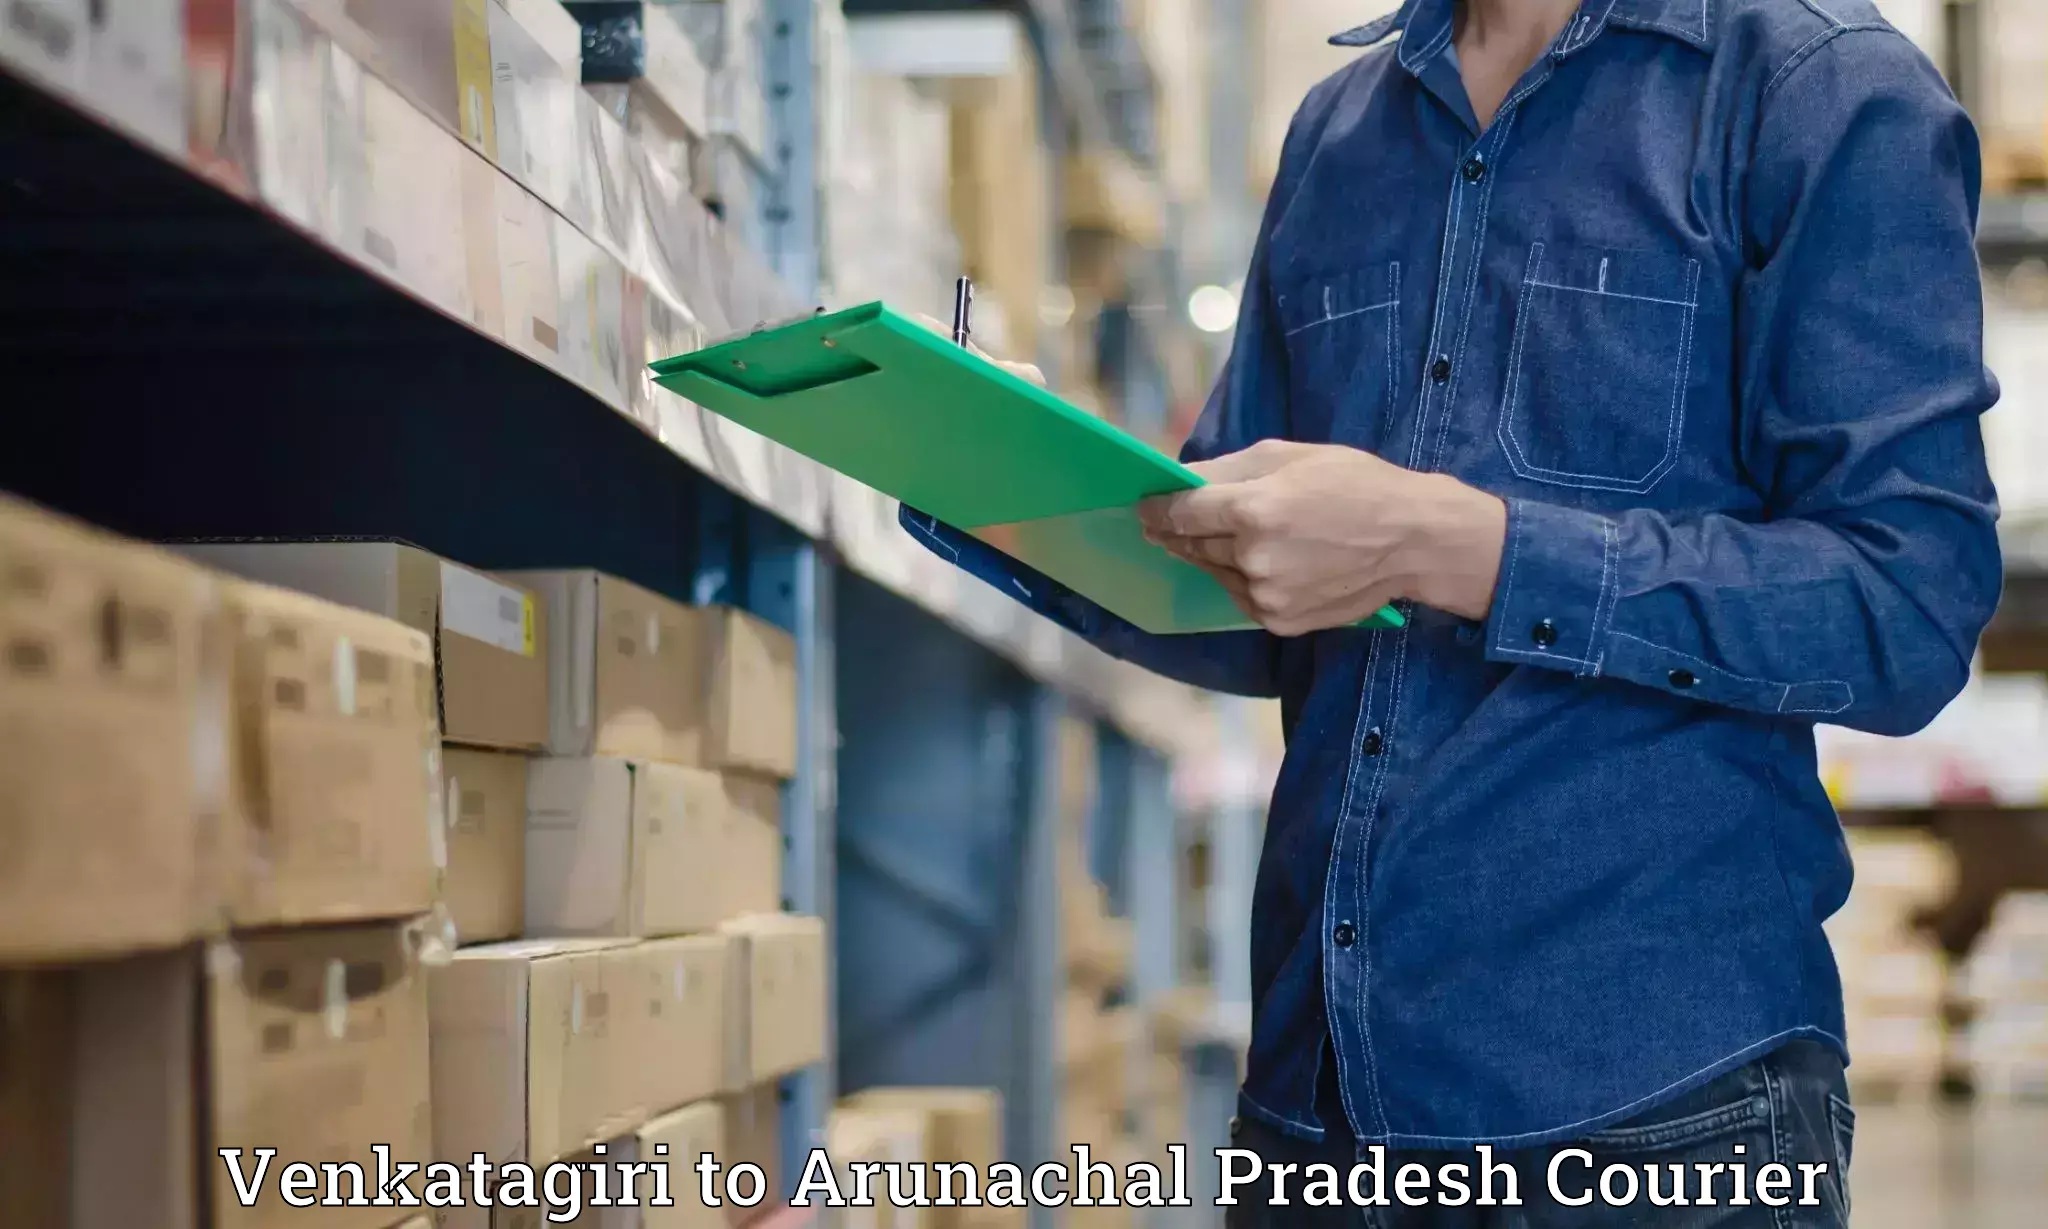 Luggage shipment specialists Venkatagiri to Arunachal Pradesh